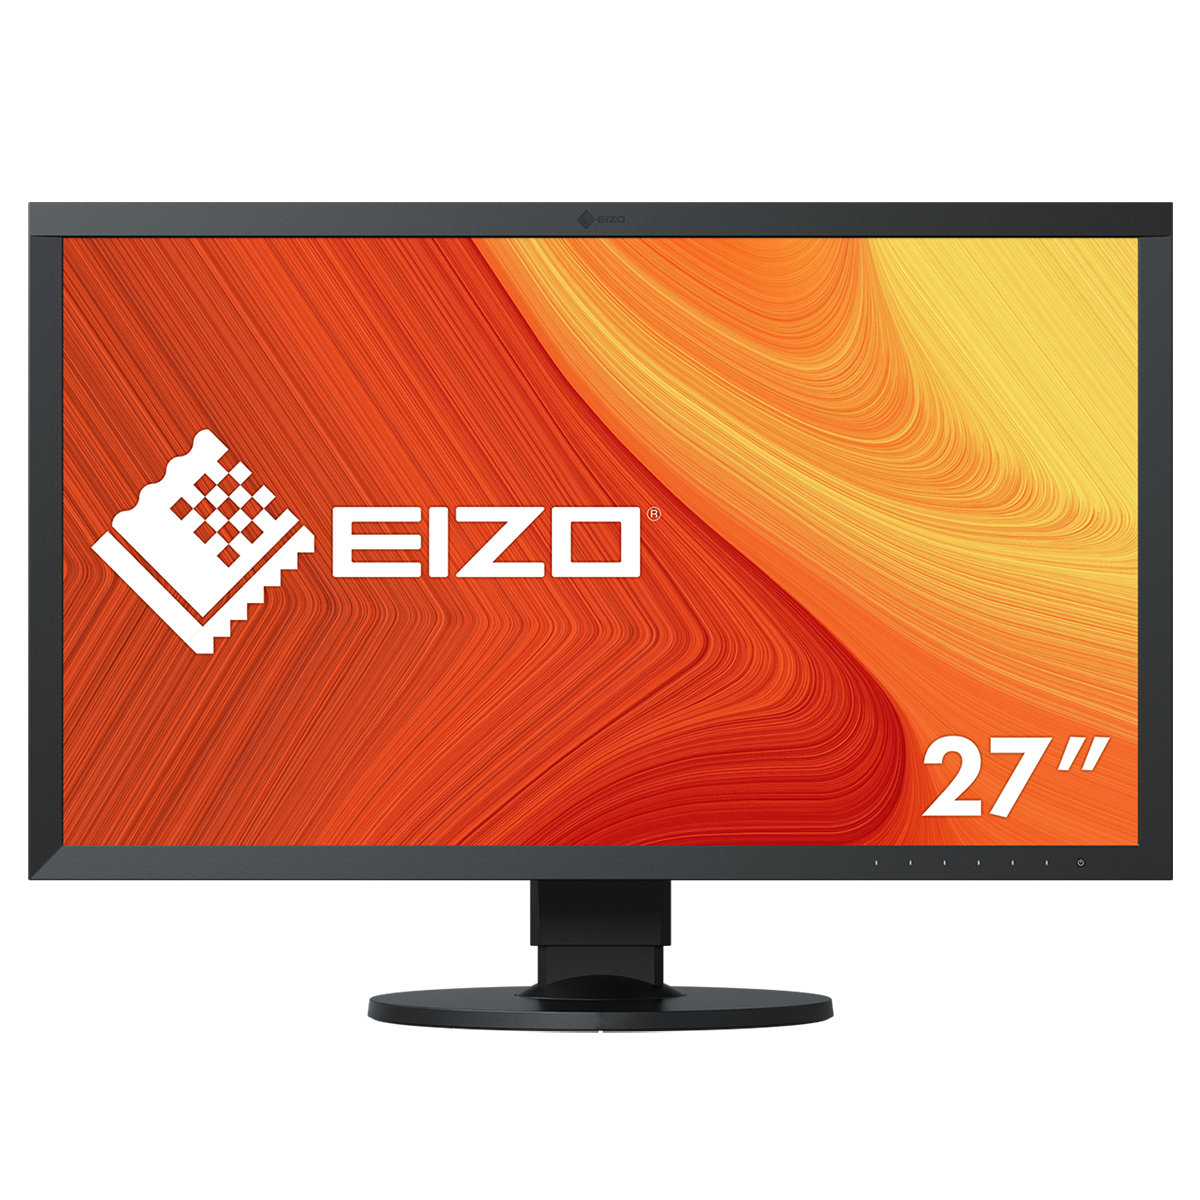 EIZO ColorEdge CS2740 LED display